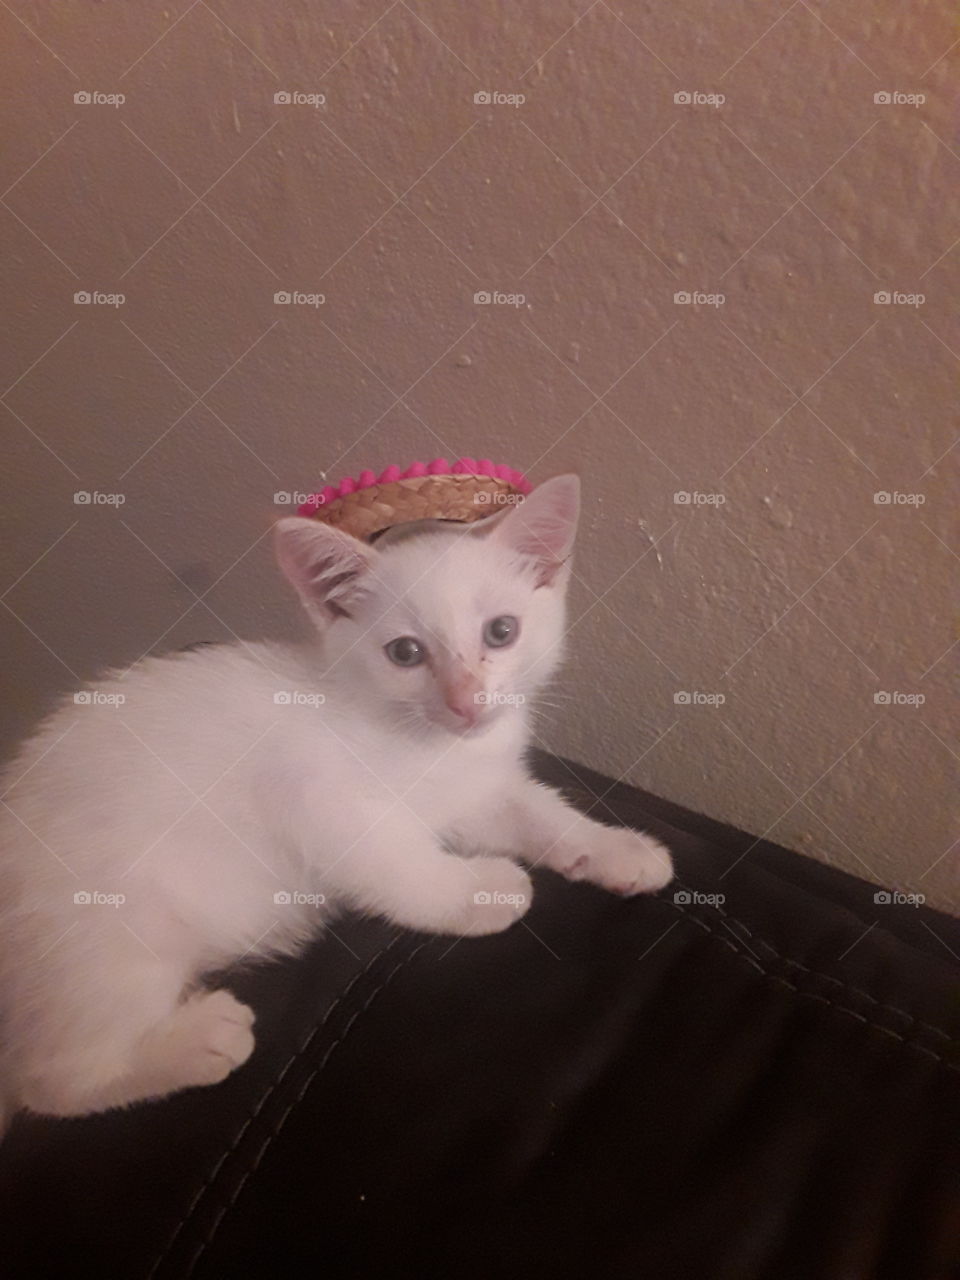 what's more fun than a kitten wearing a sombrero